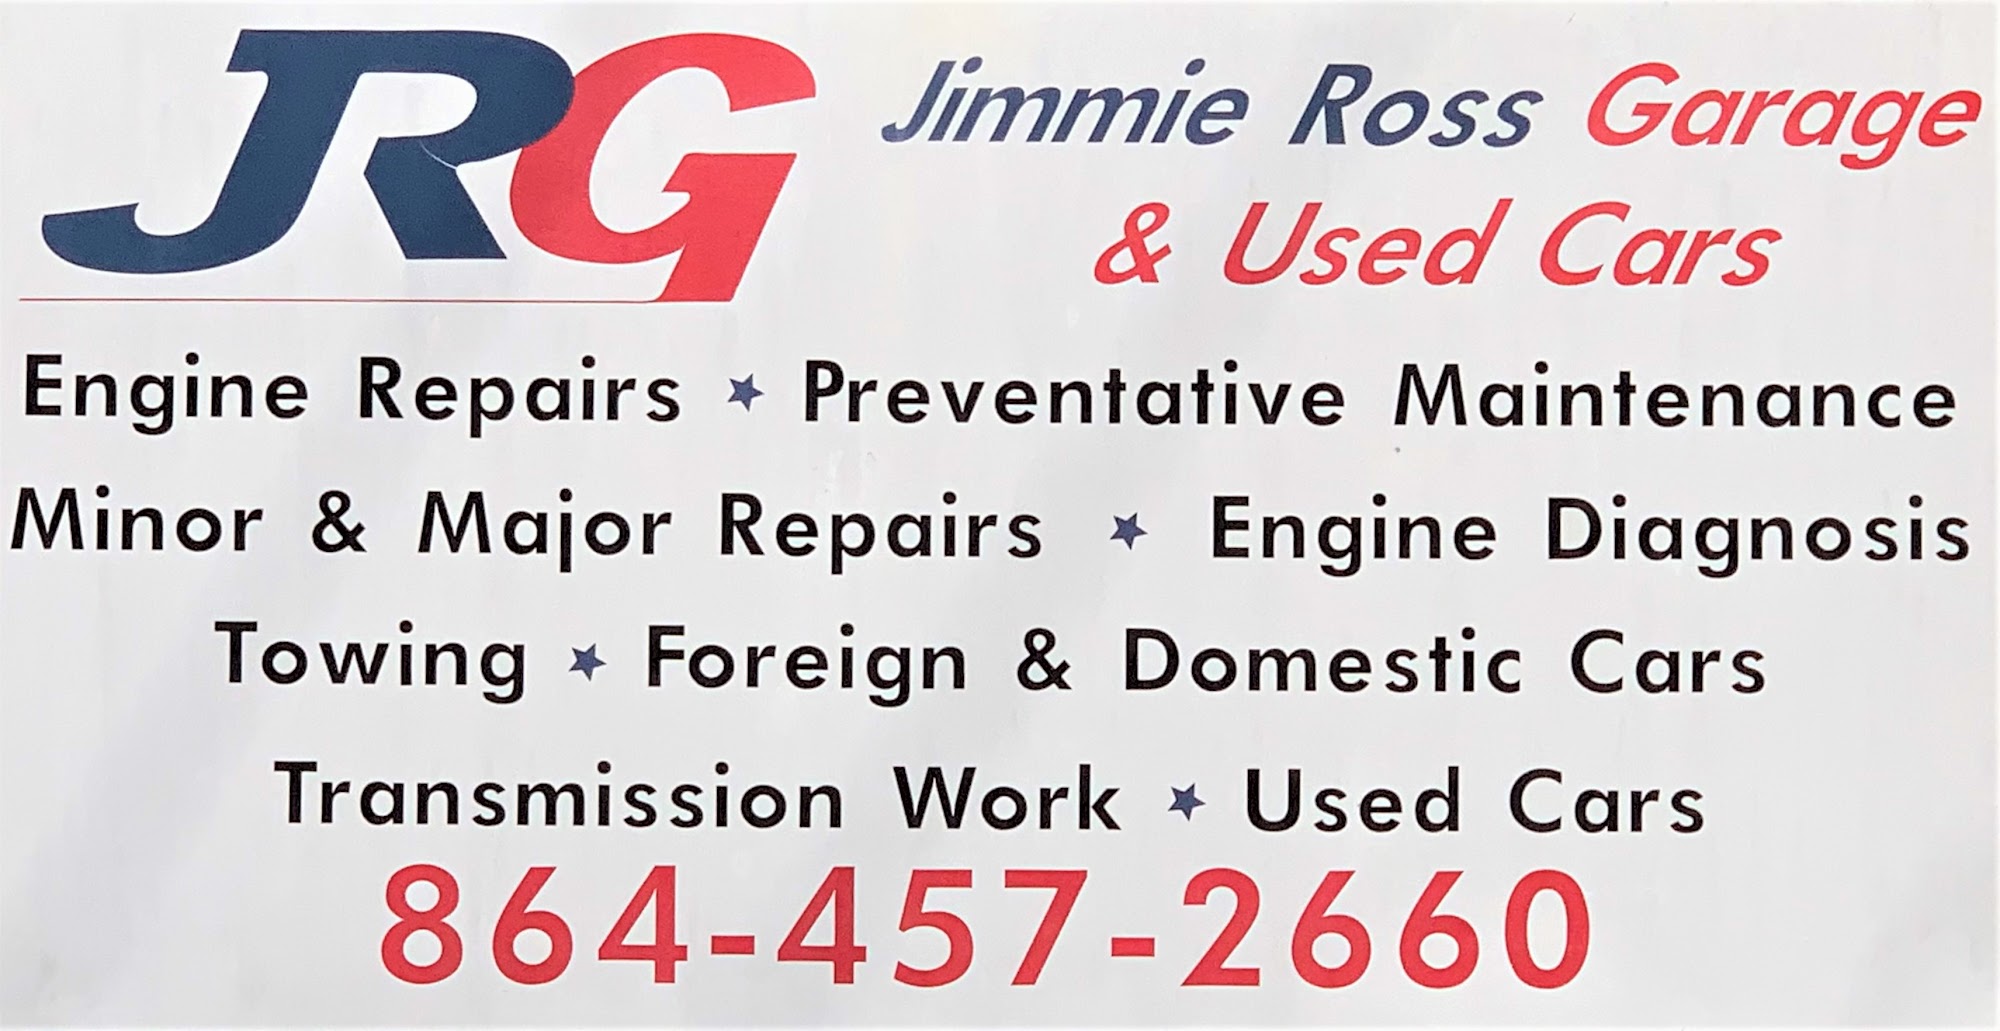 Jimmie Ross Garage